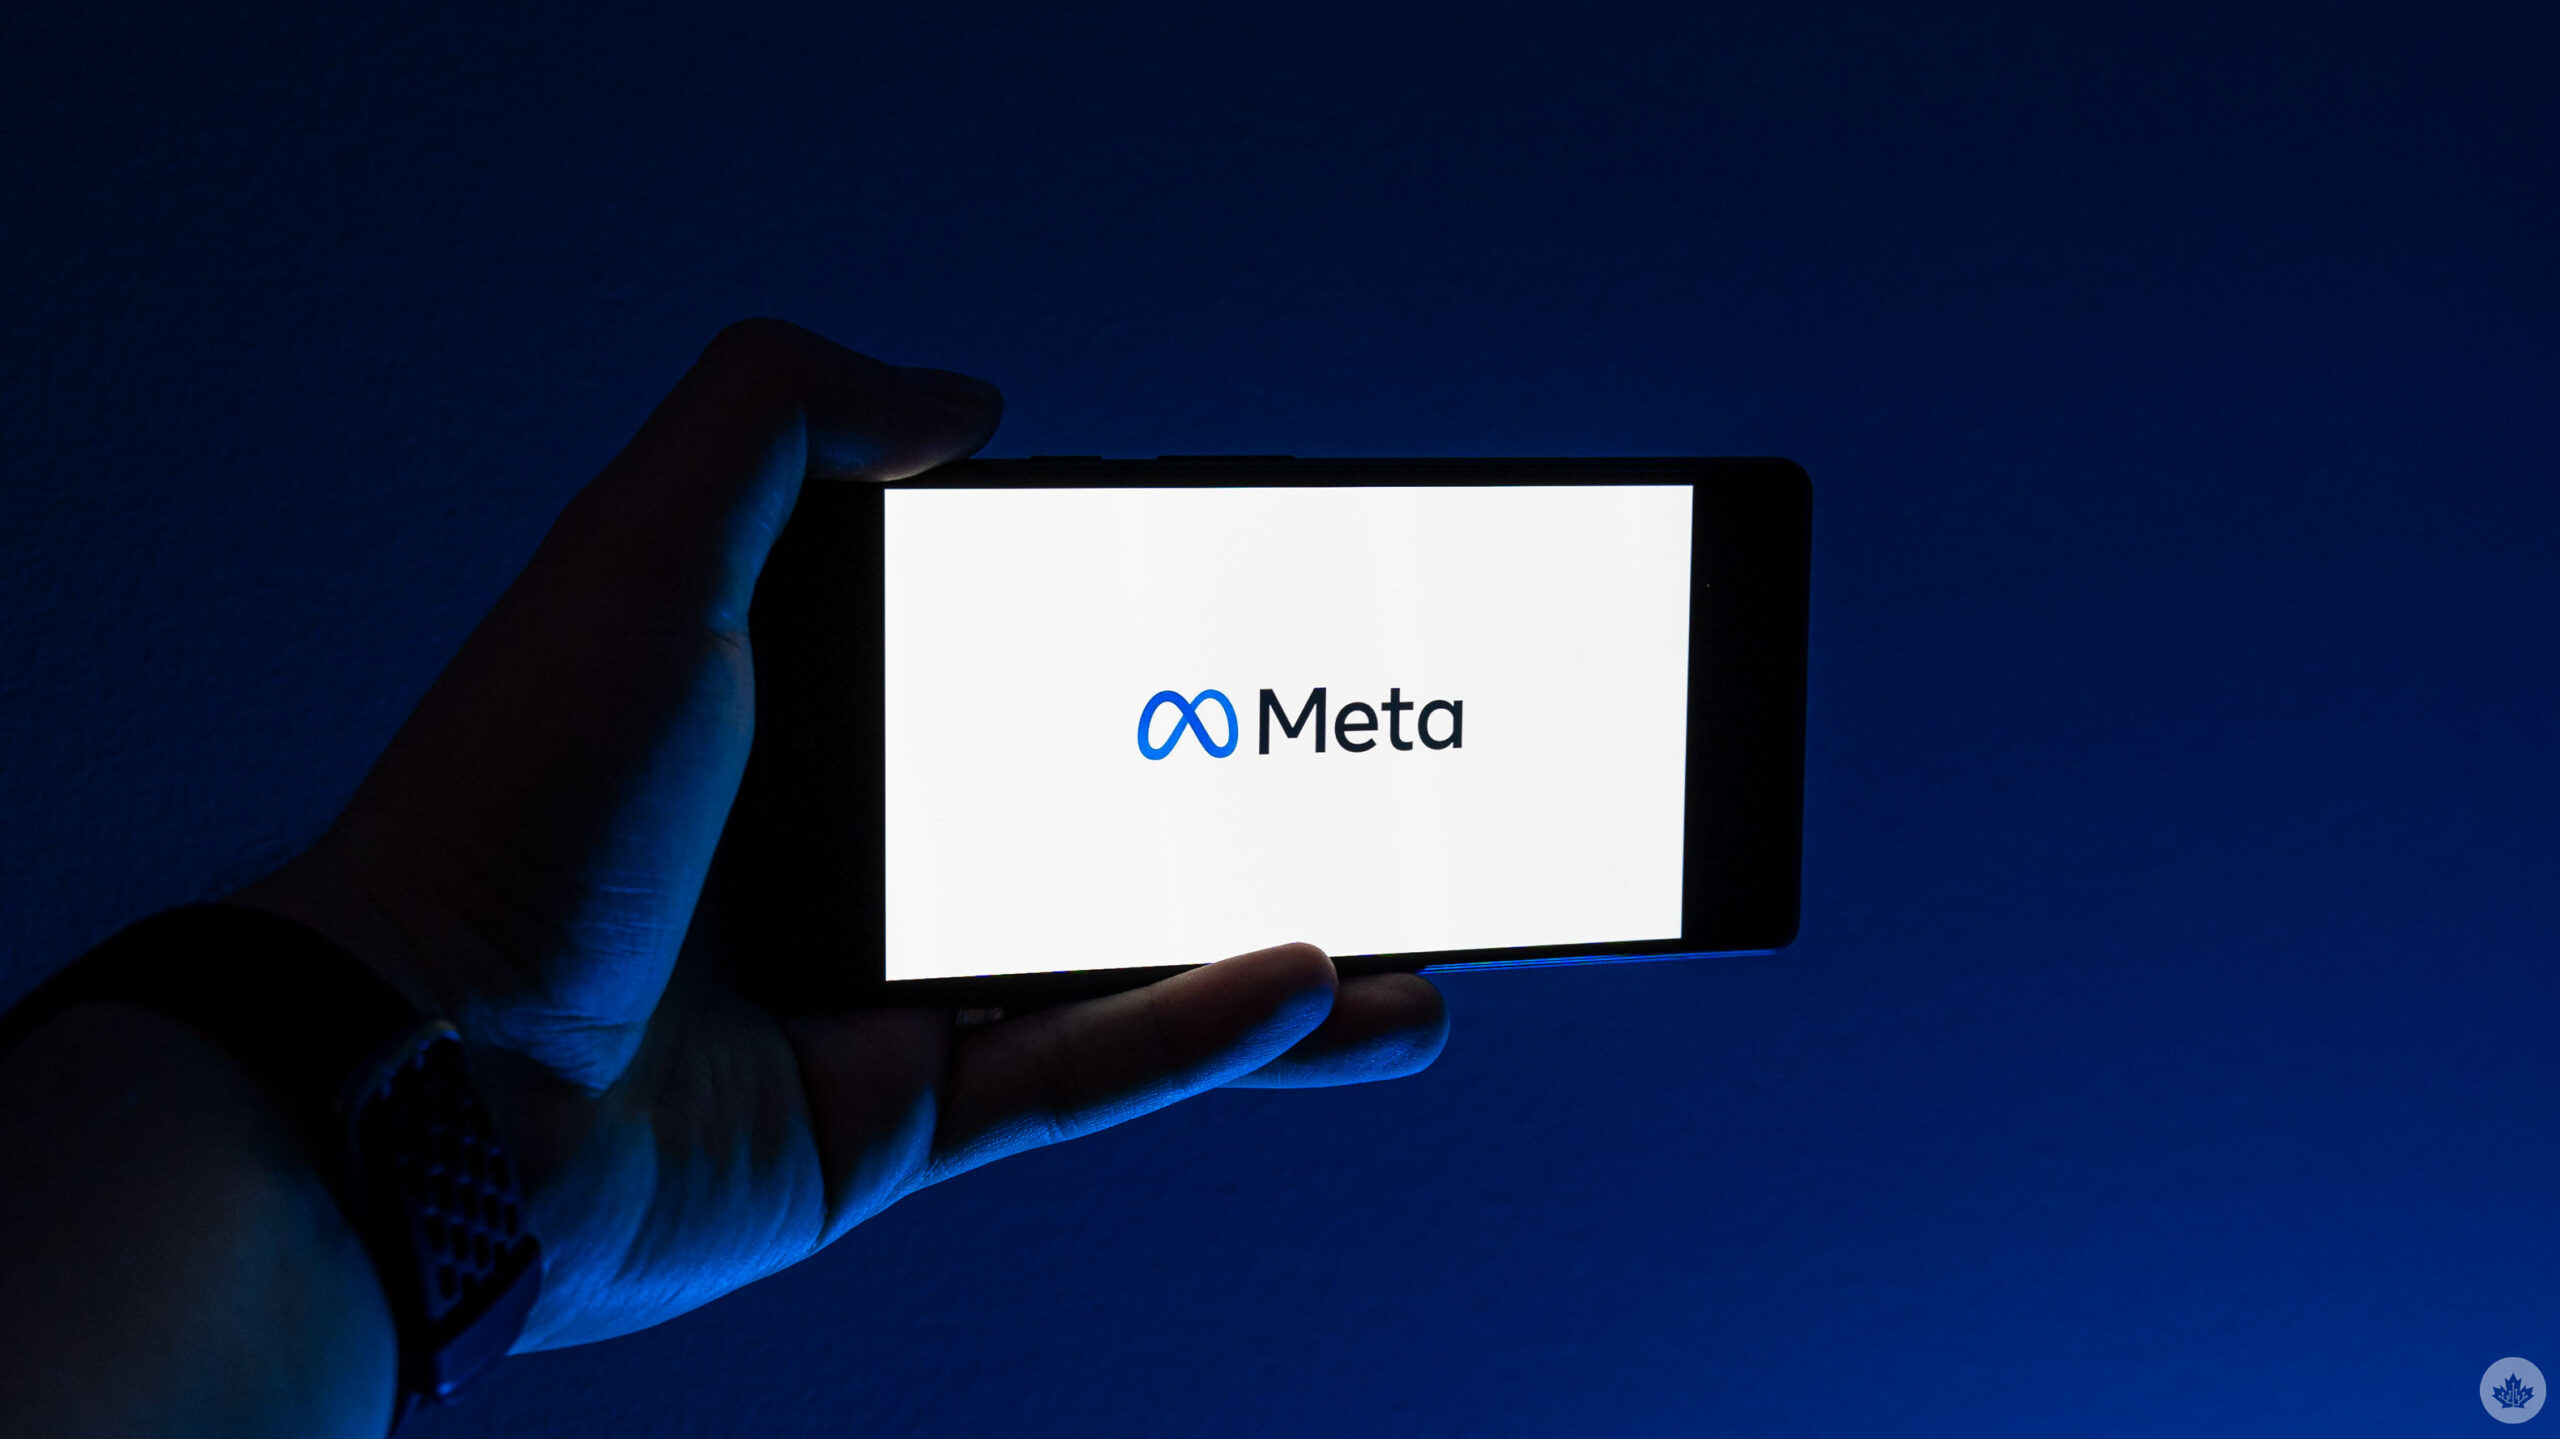 Meta logo on a smartphone